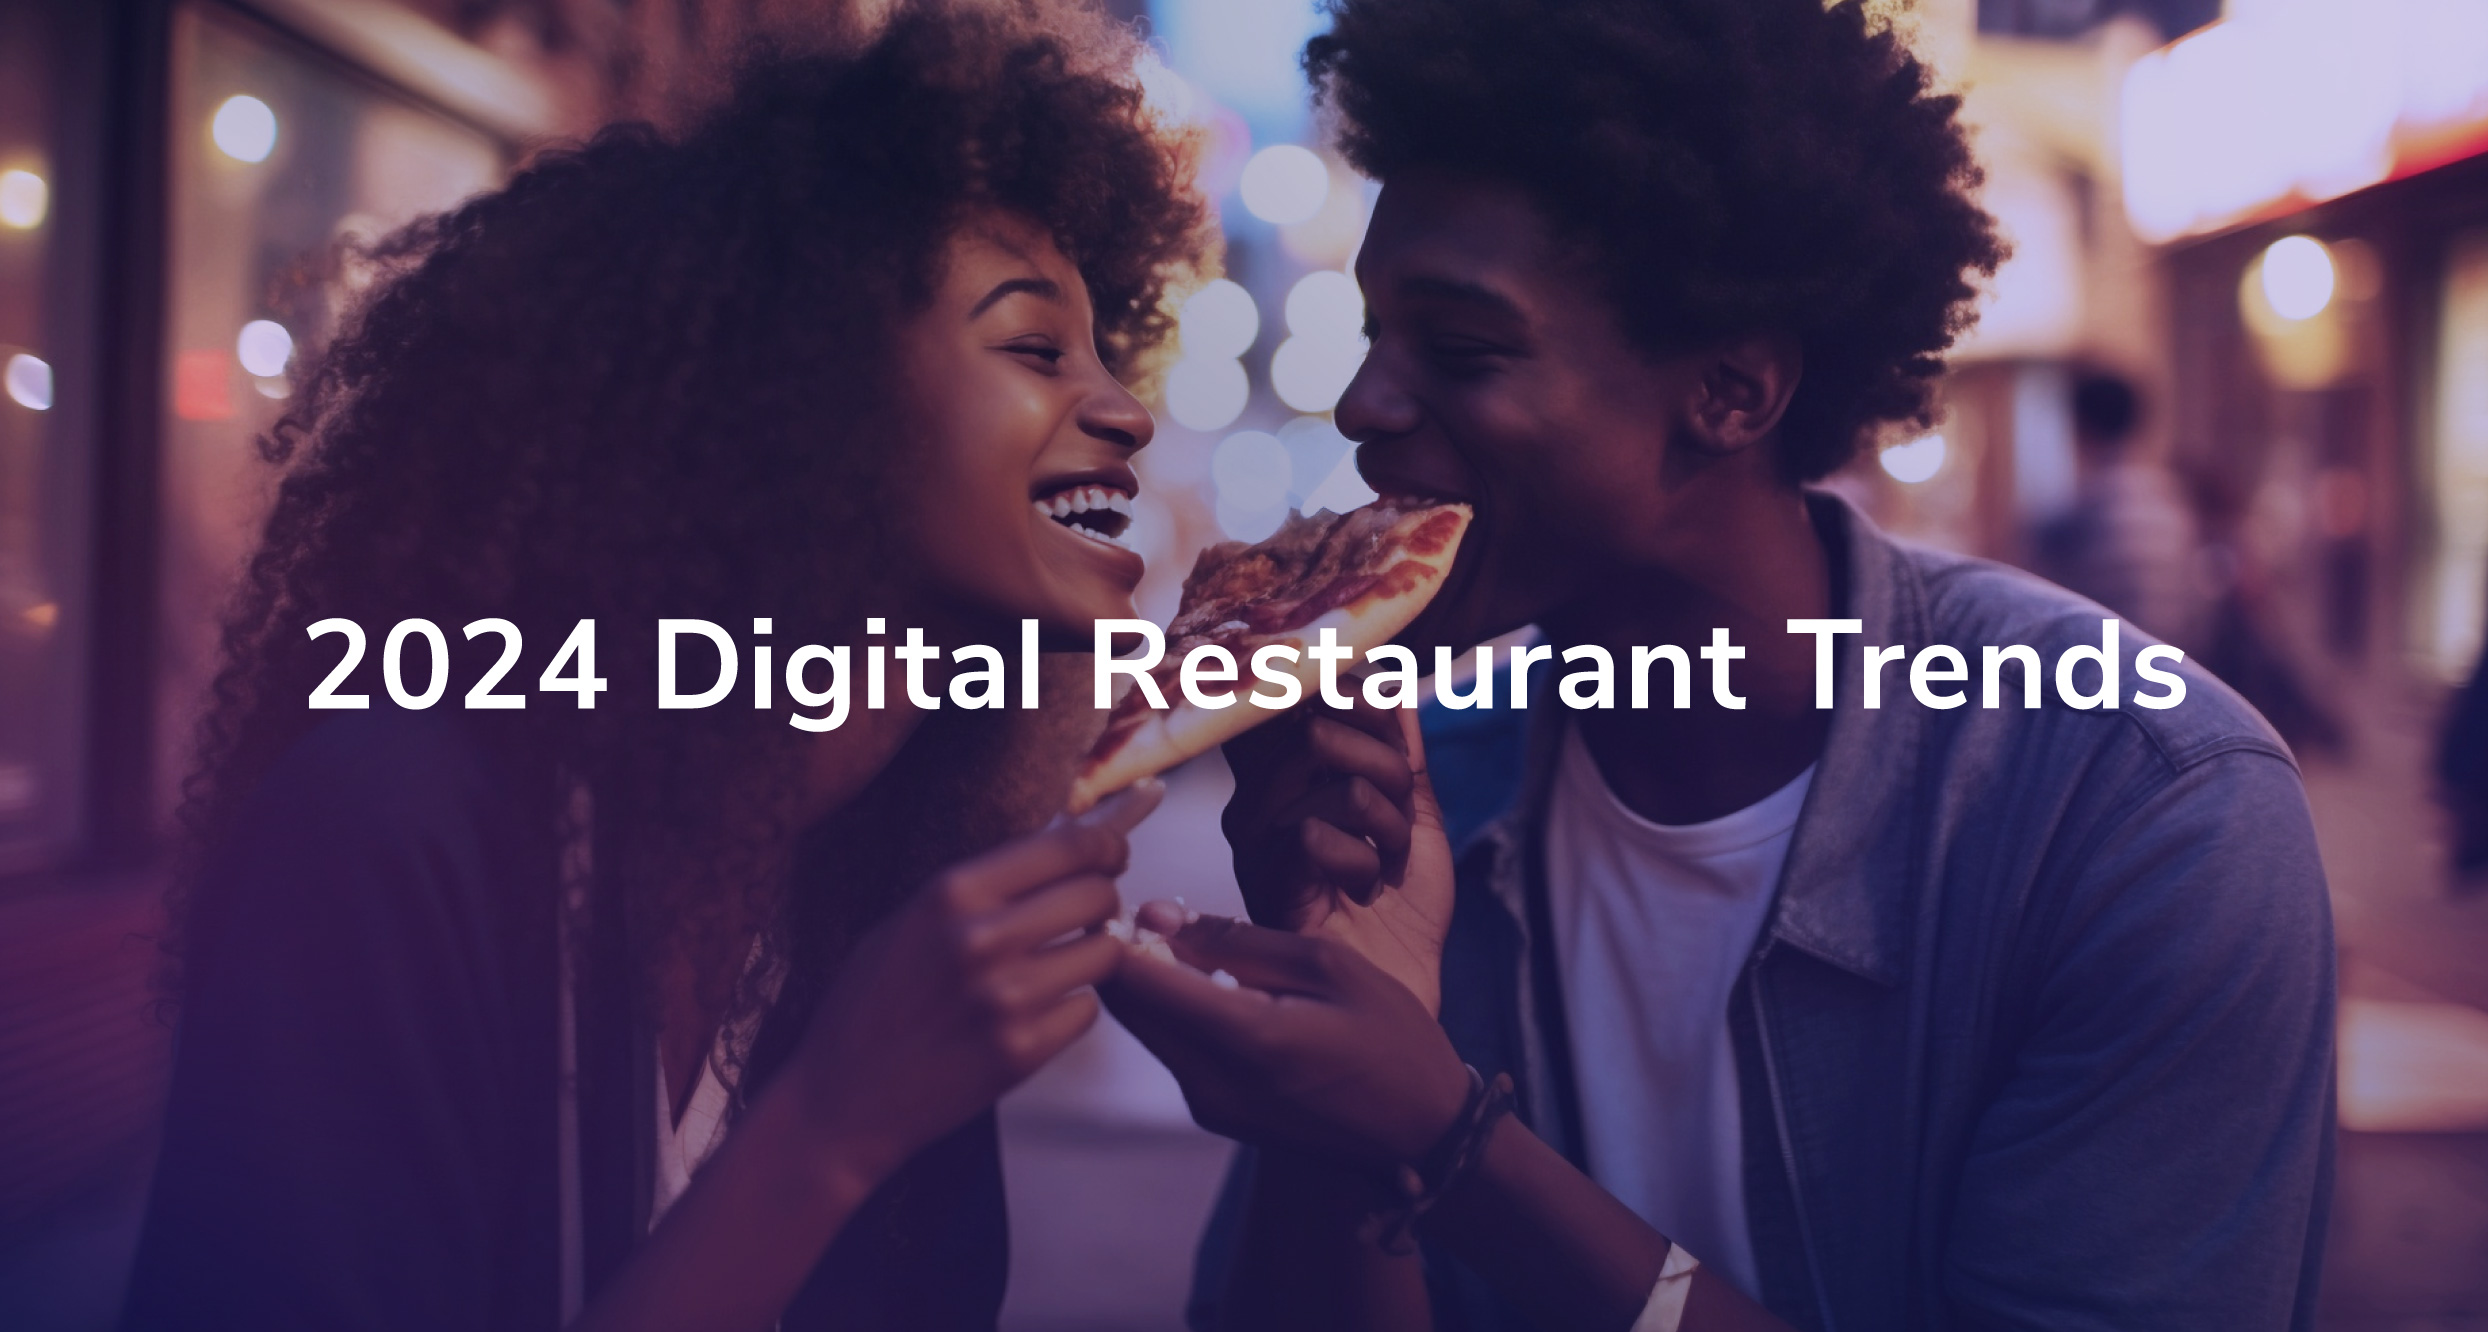 Top 5 Digital Experience Trends for Restaurants in 2024